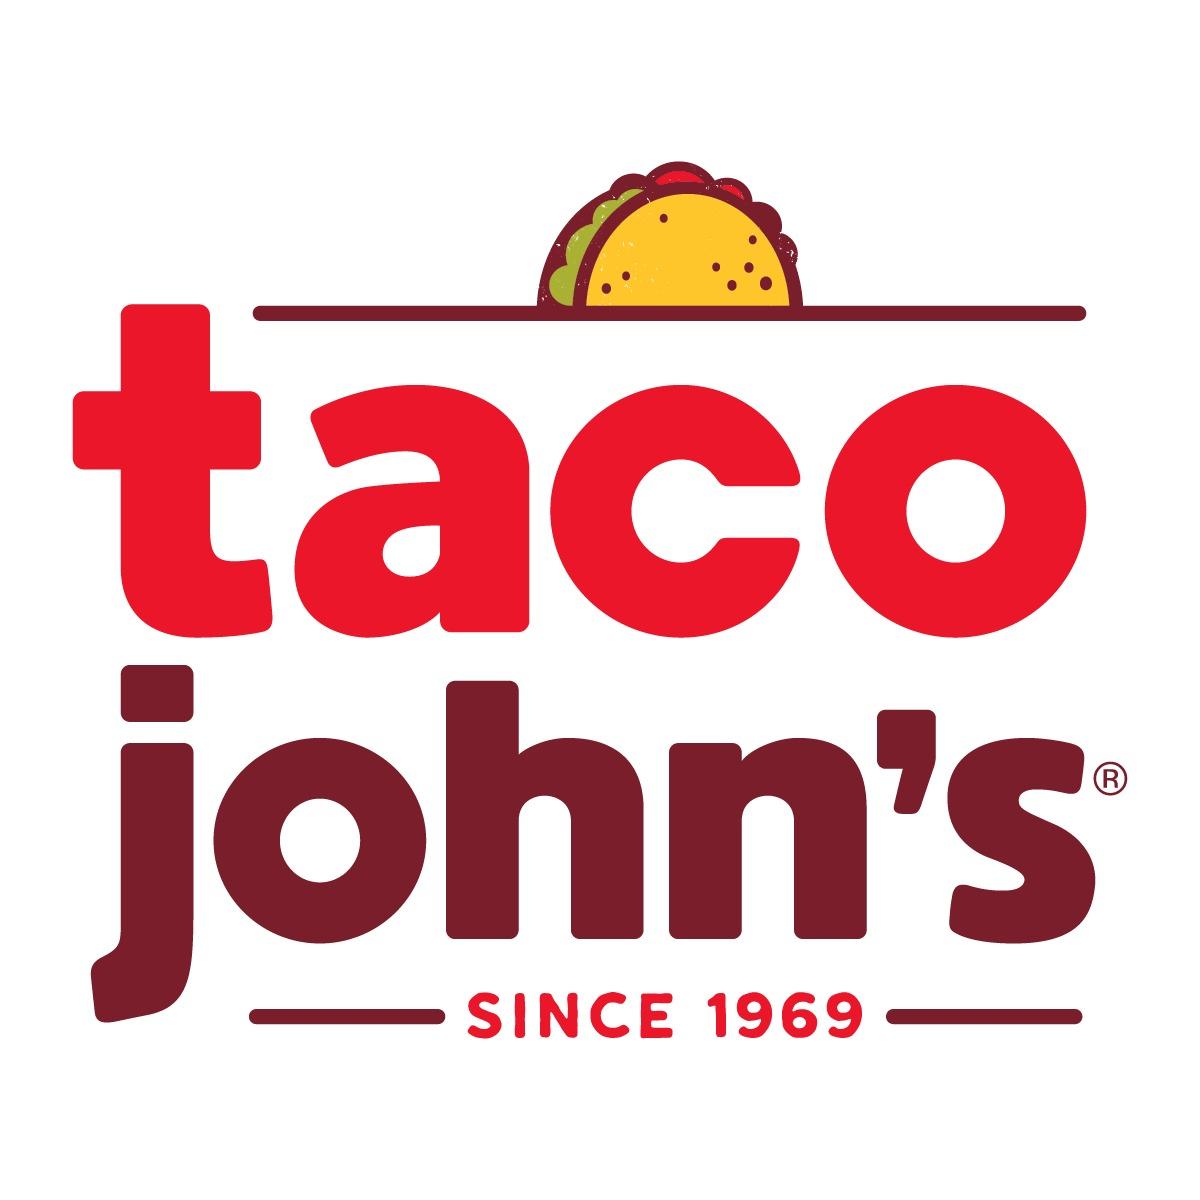 Taco John's - Coming Soon